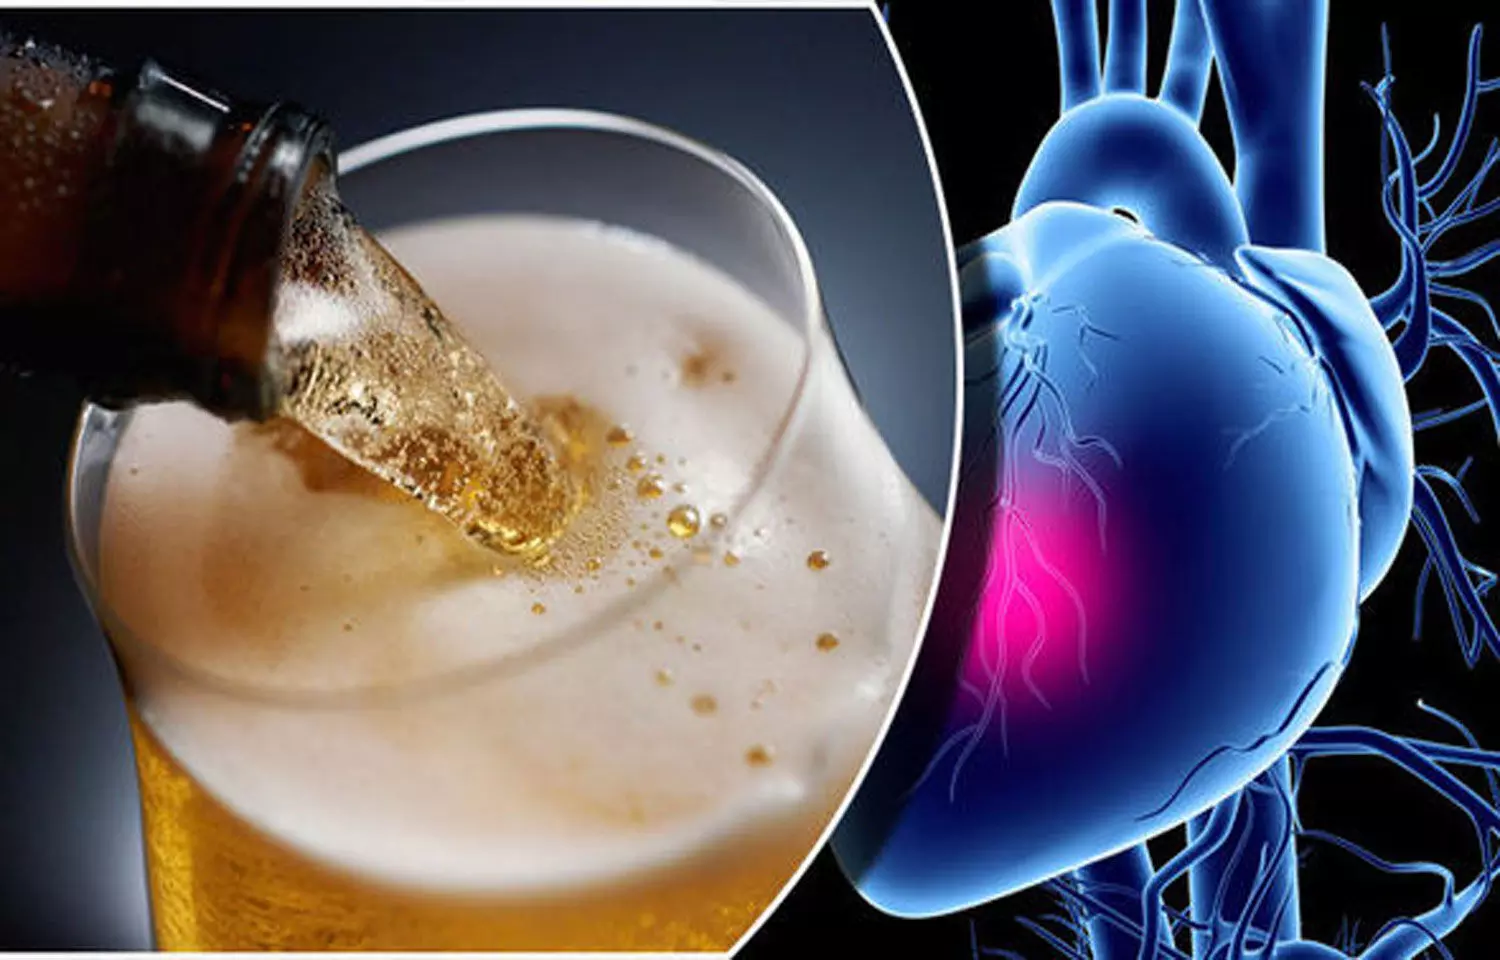 JAMA study refutes the claim that Light alcohol consumption benefits heart health